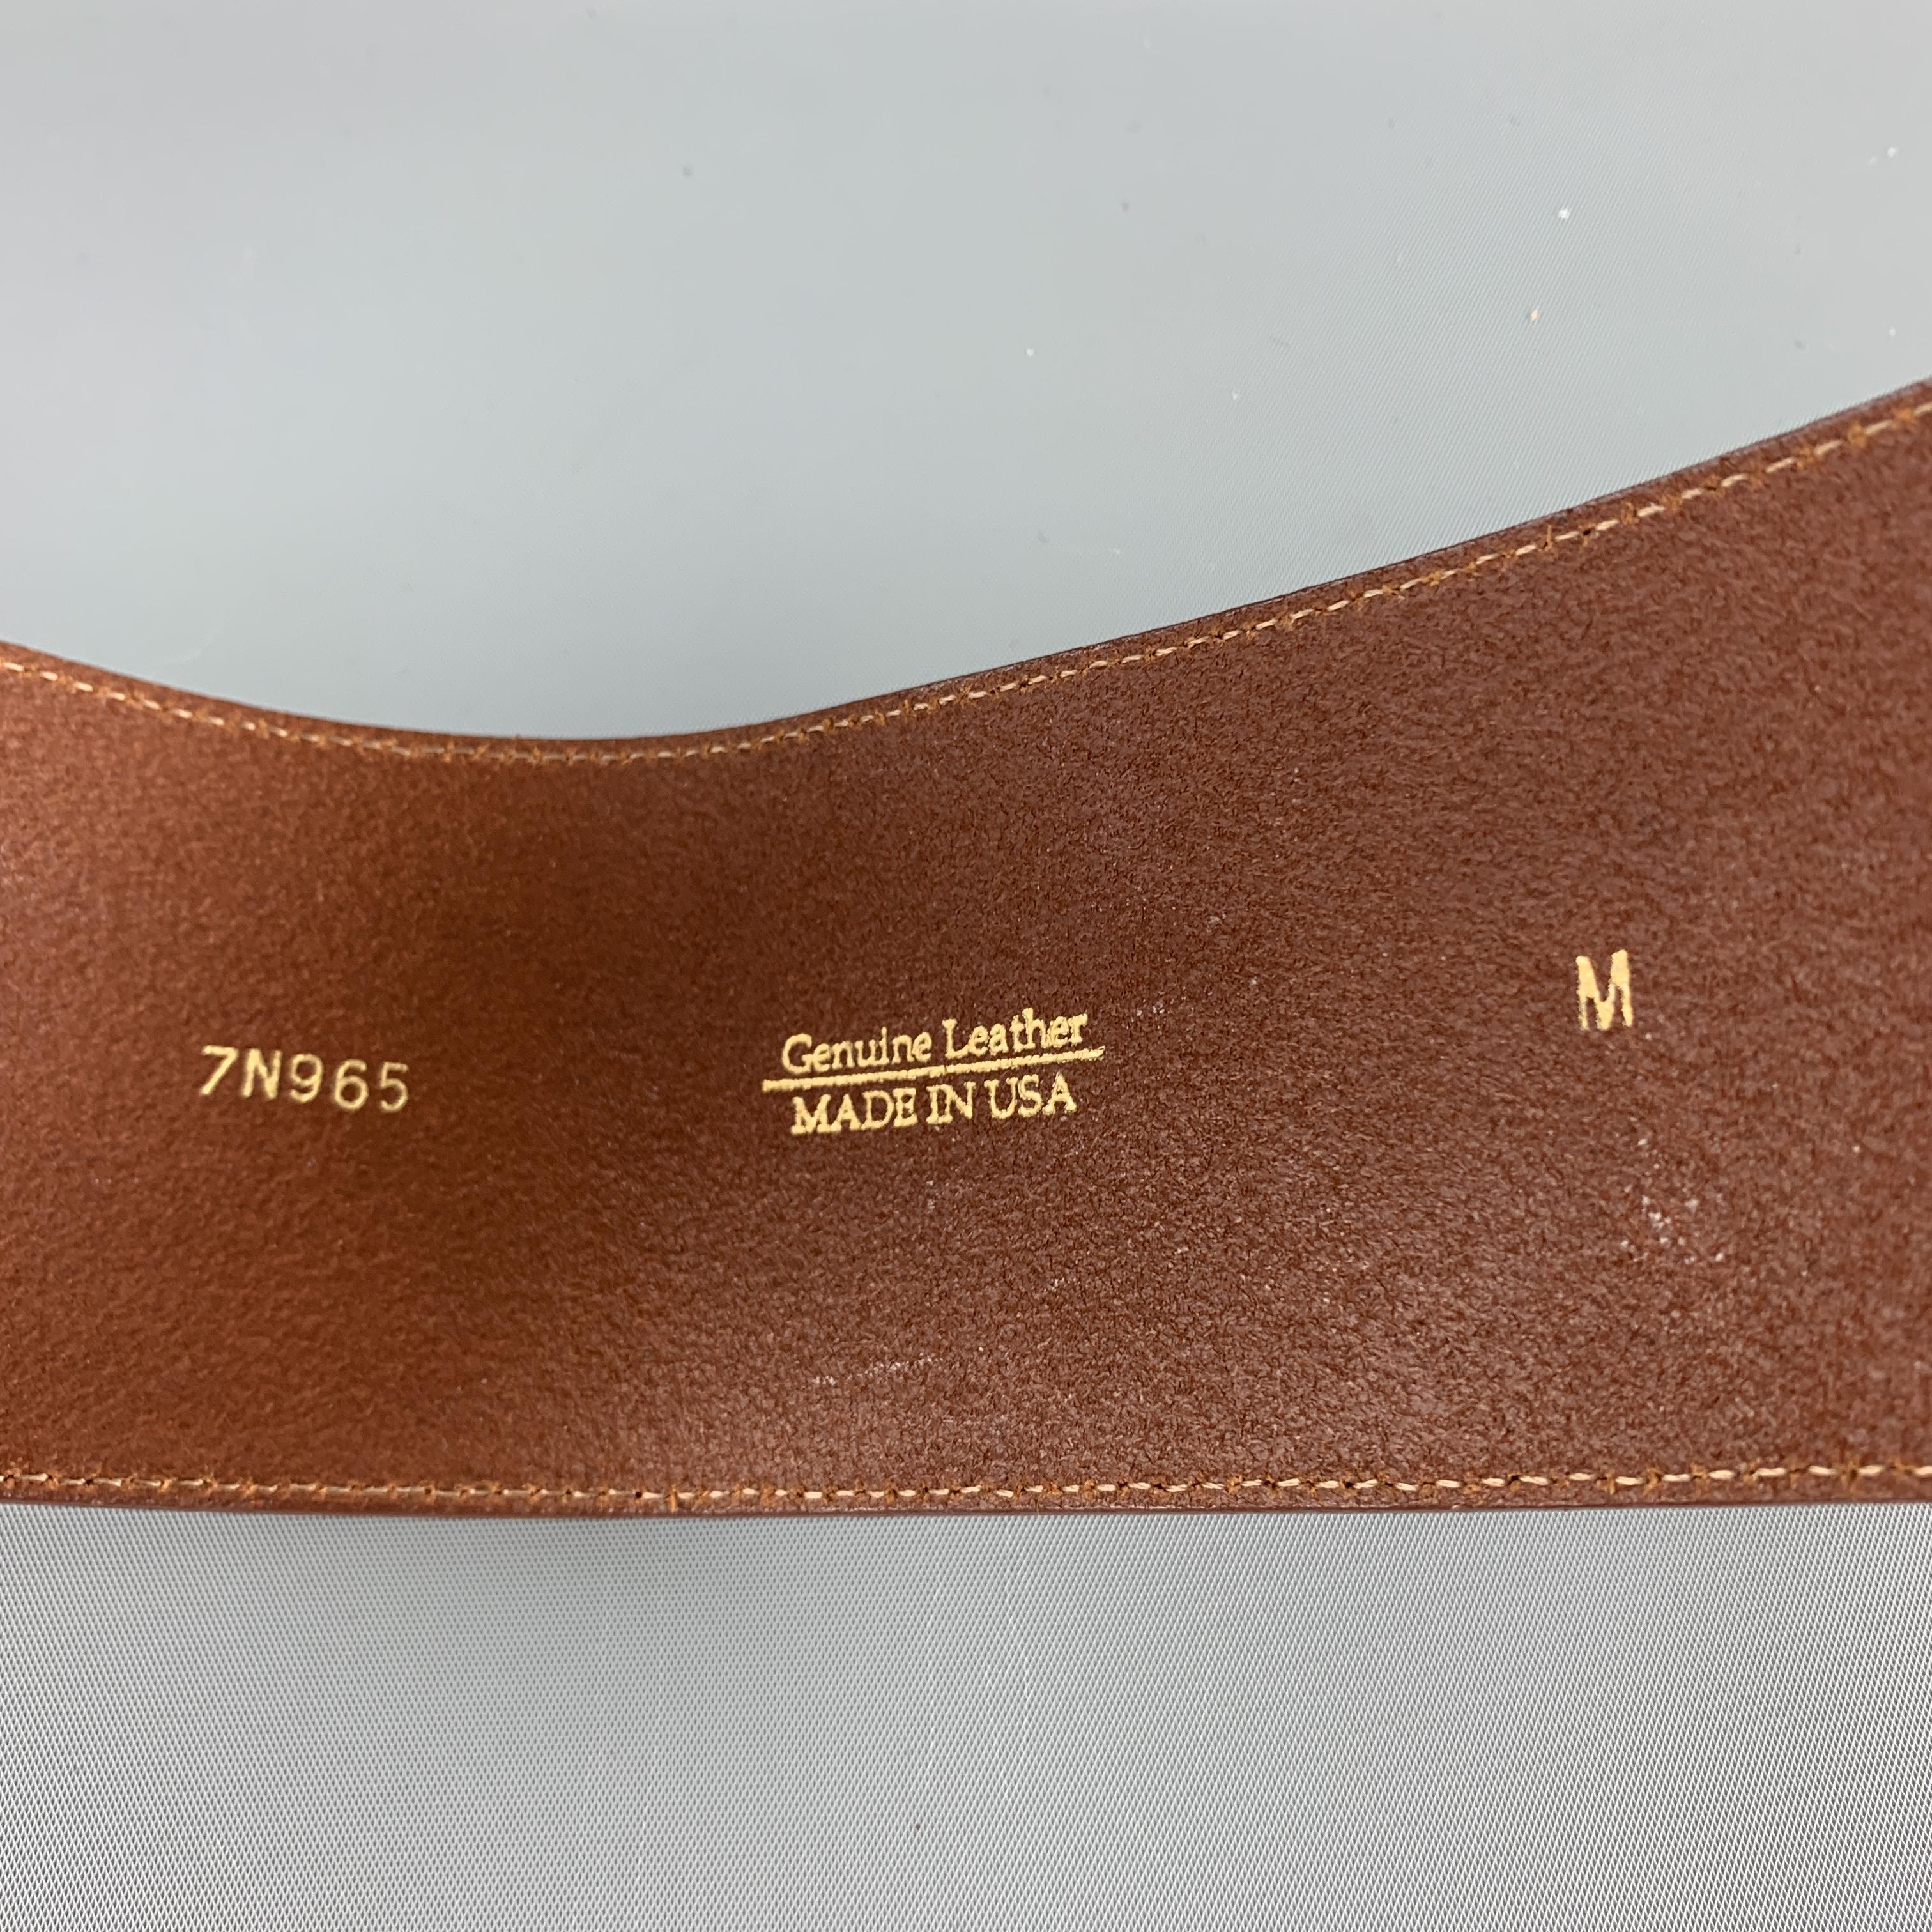 Brown OSCAR DE LA RENTA Size M Tan Leather Silver Buckle Wrap Belt